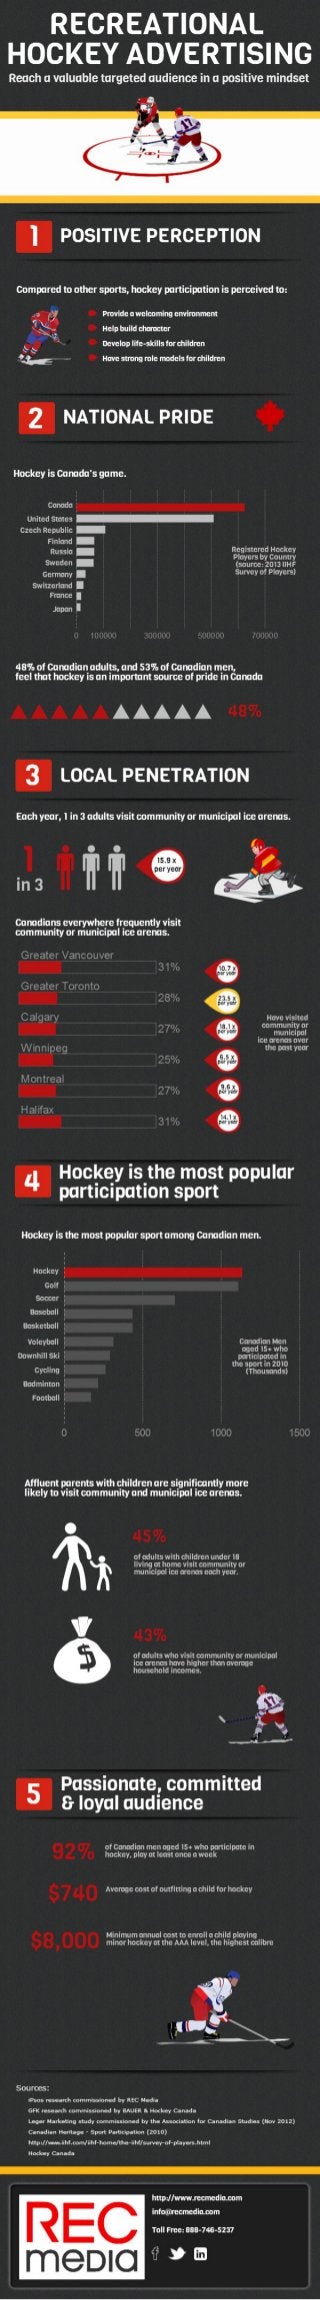 Recreational Hockey Advertising Infographic